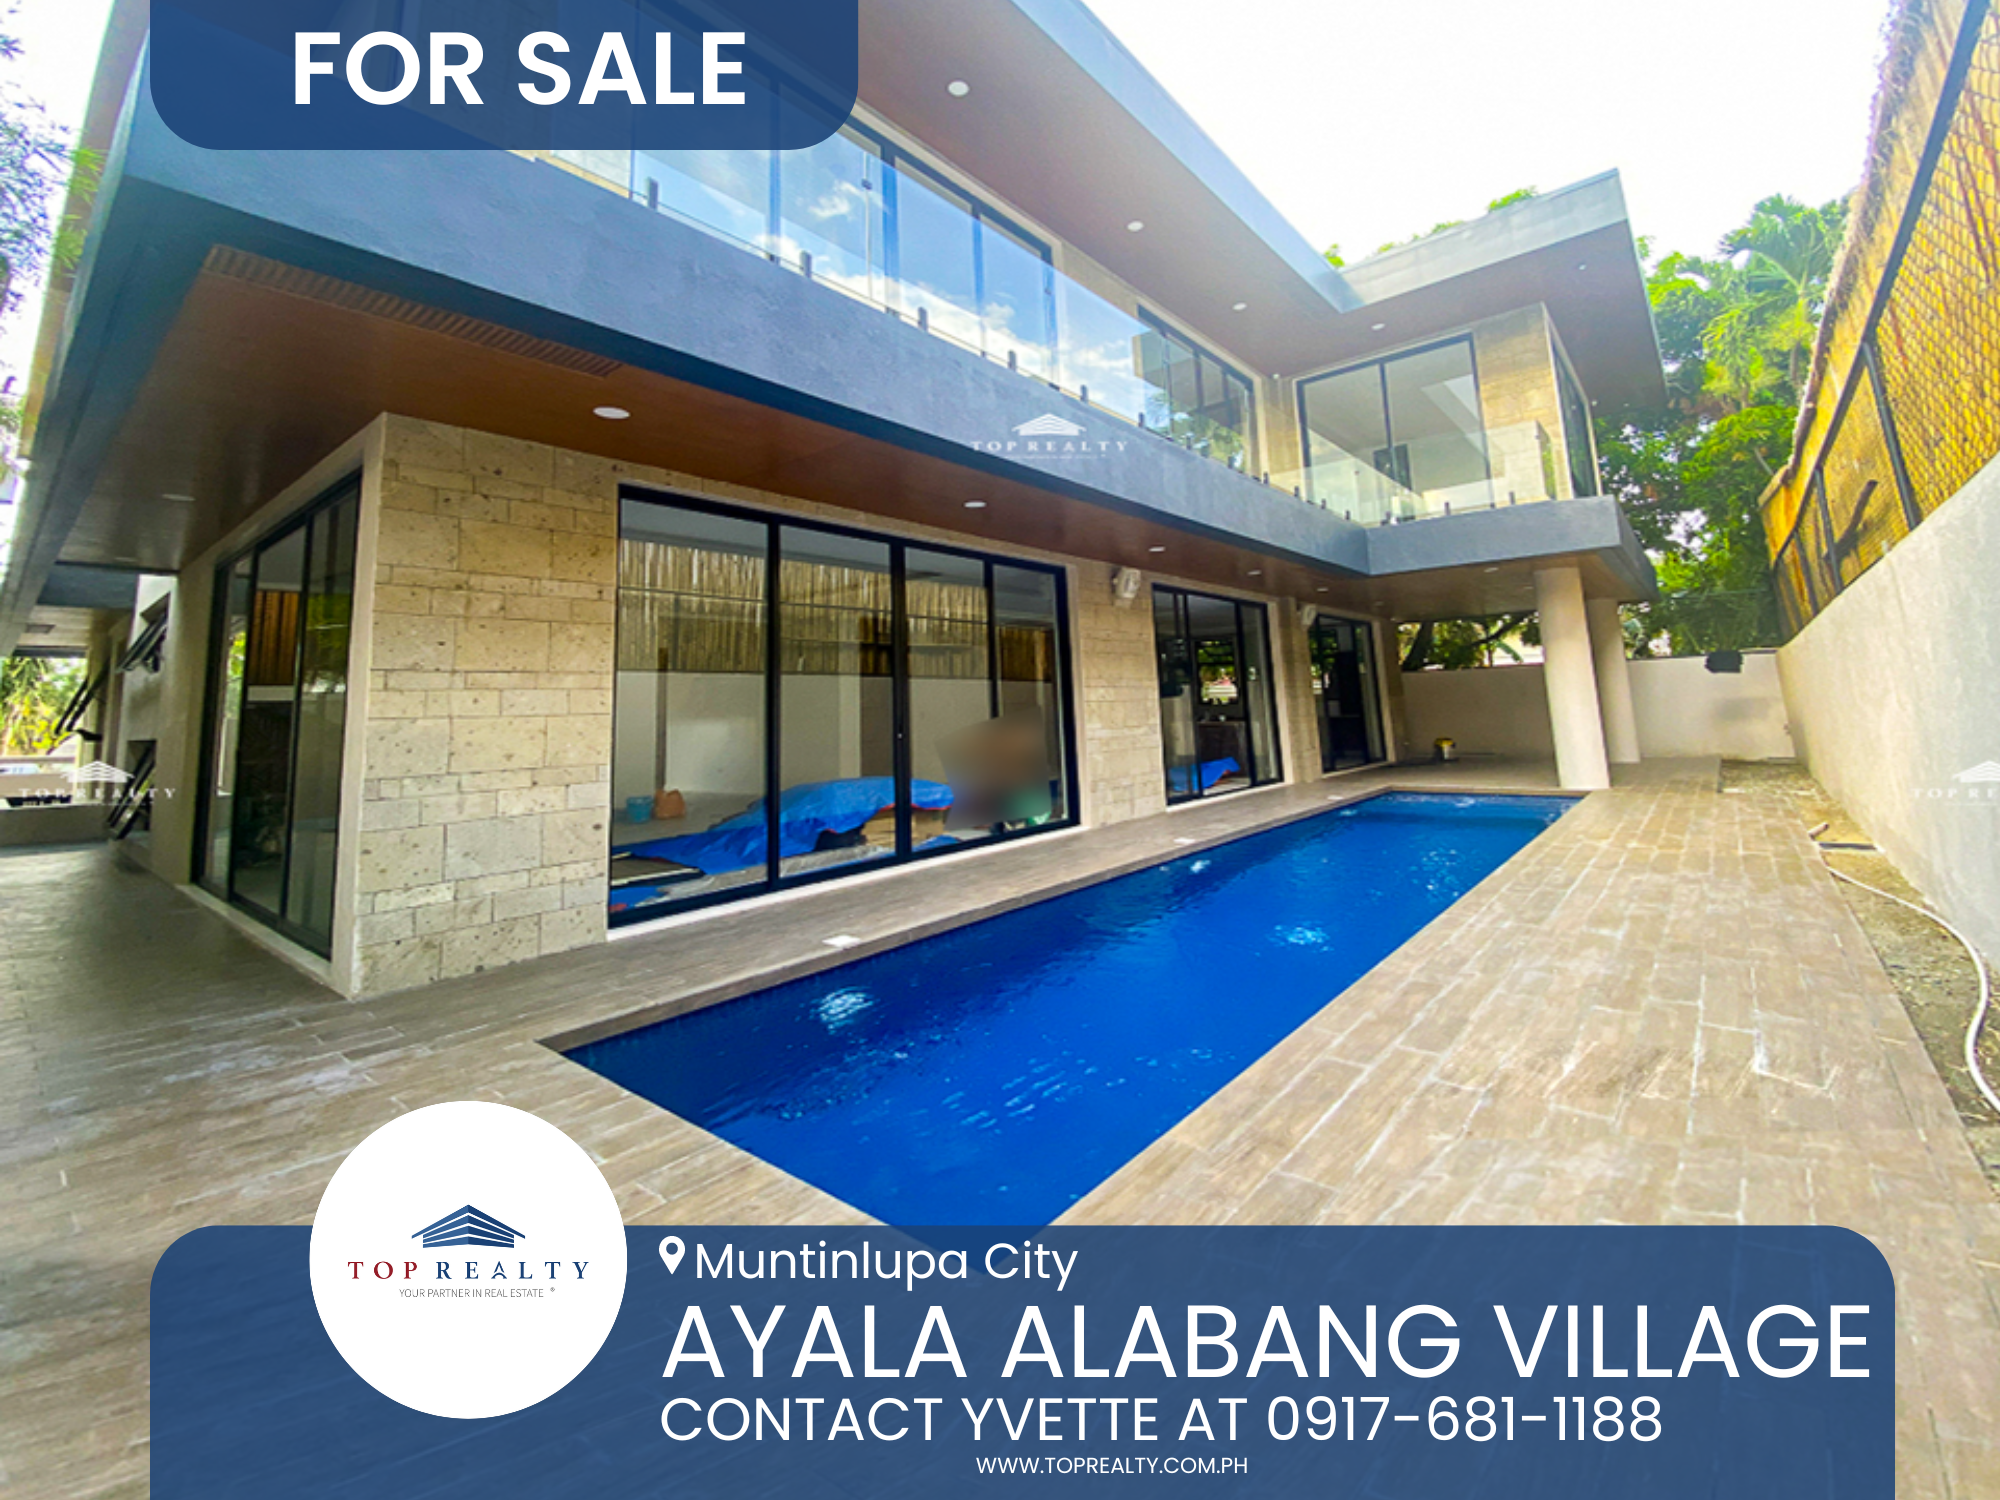 For Sale: House in Ayala Alabang Village, Muntinlupa City